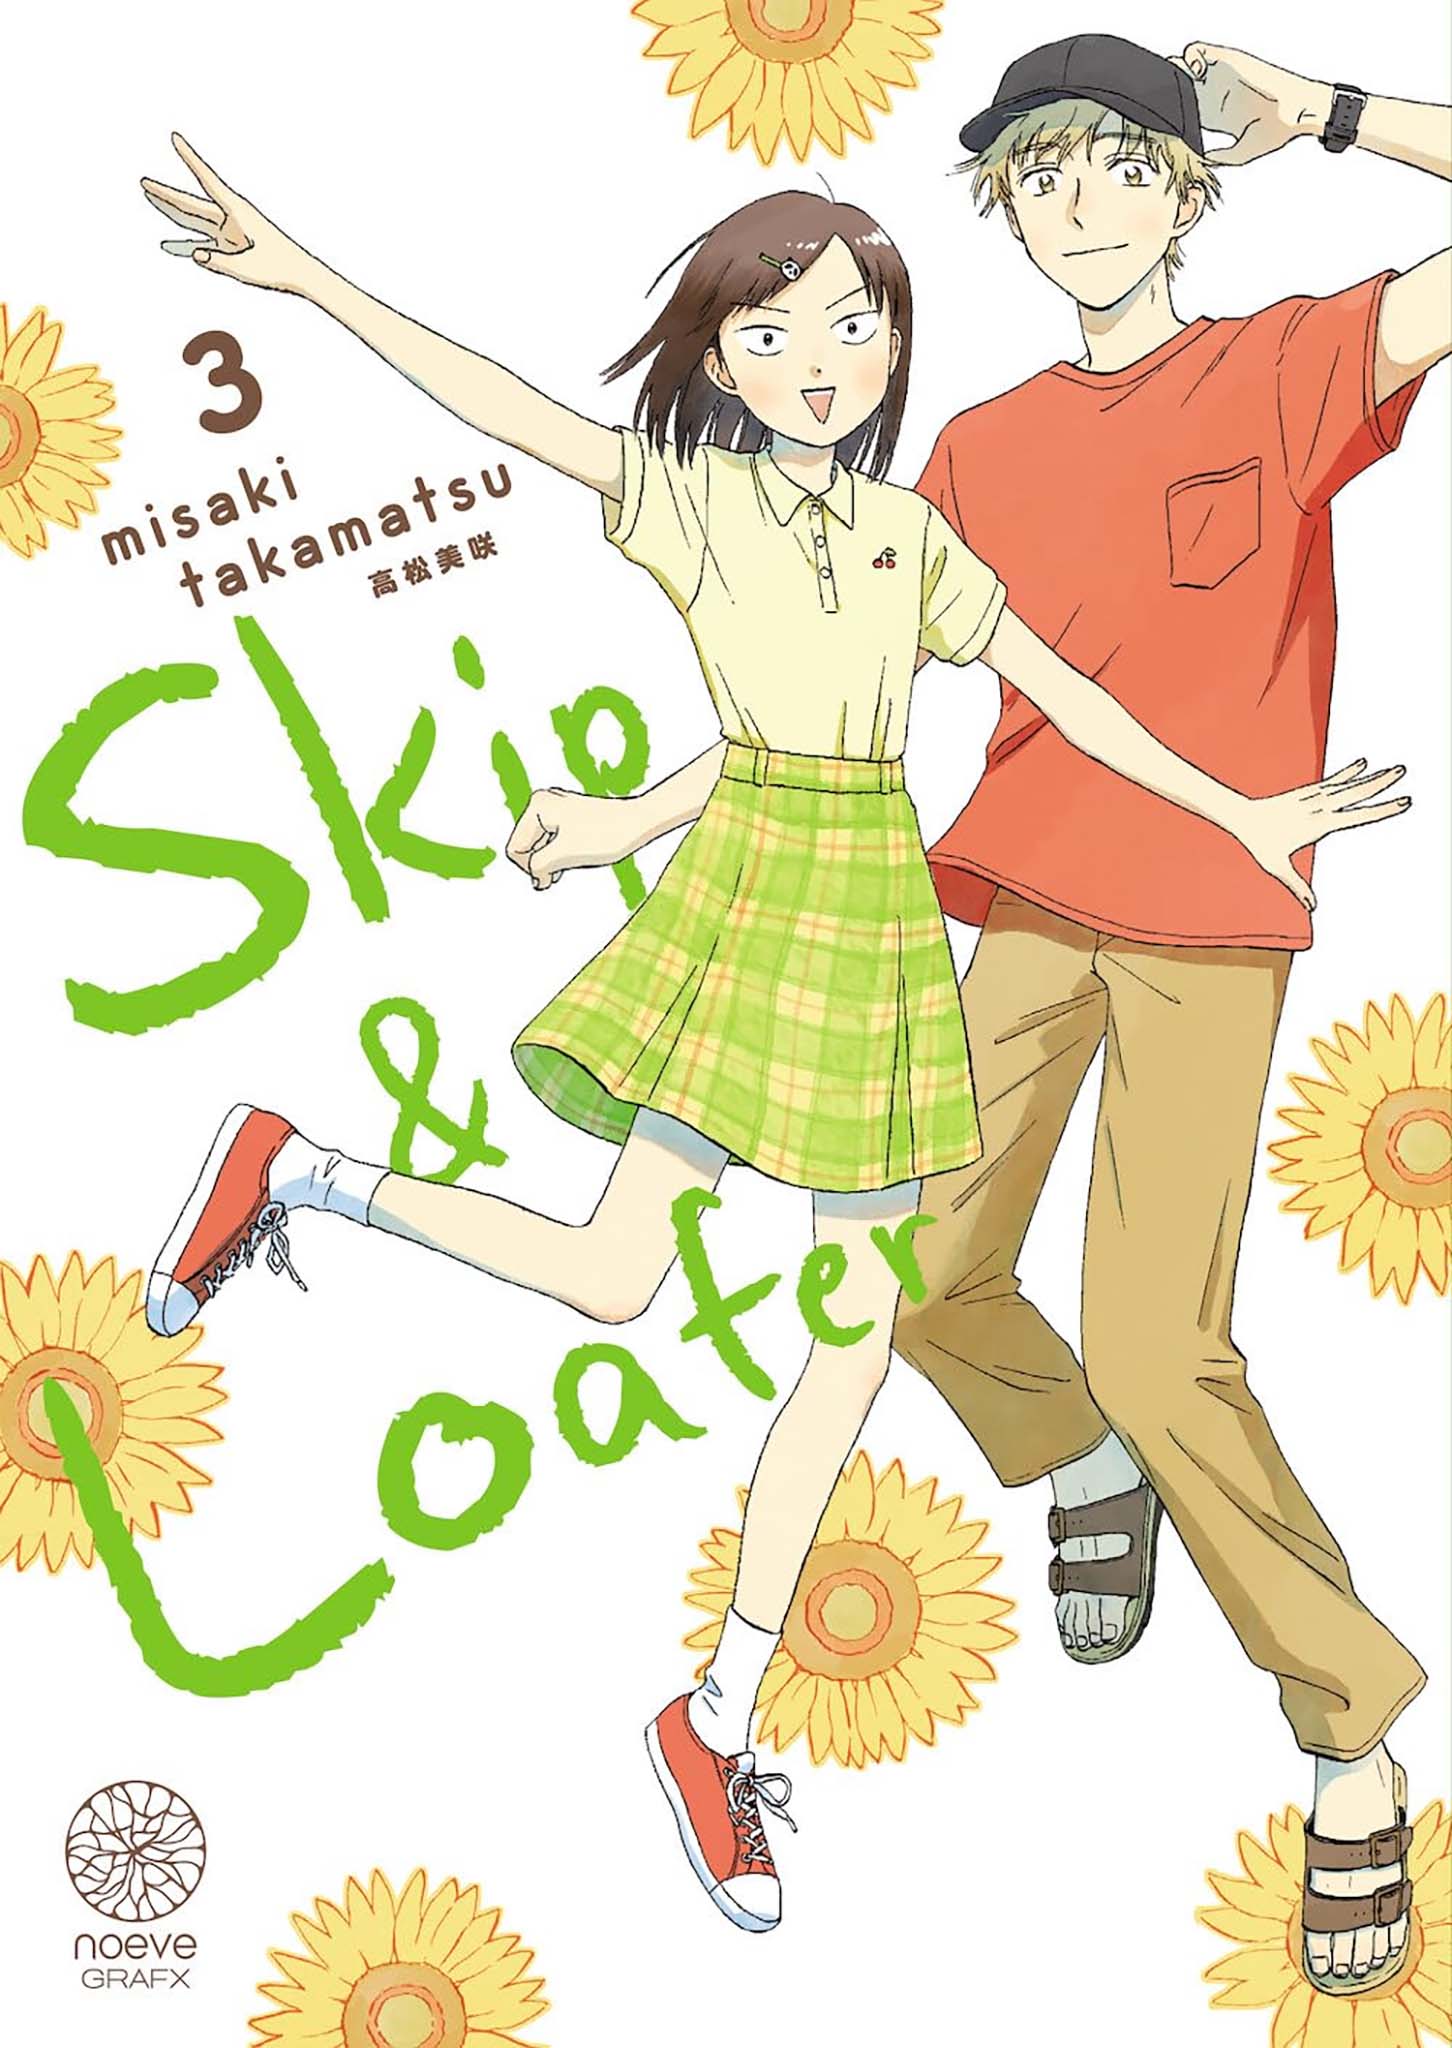 Tome 3 du manga Skip and Loafer.